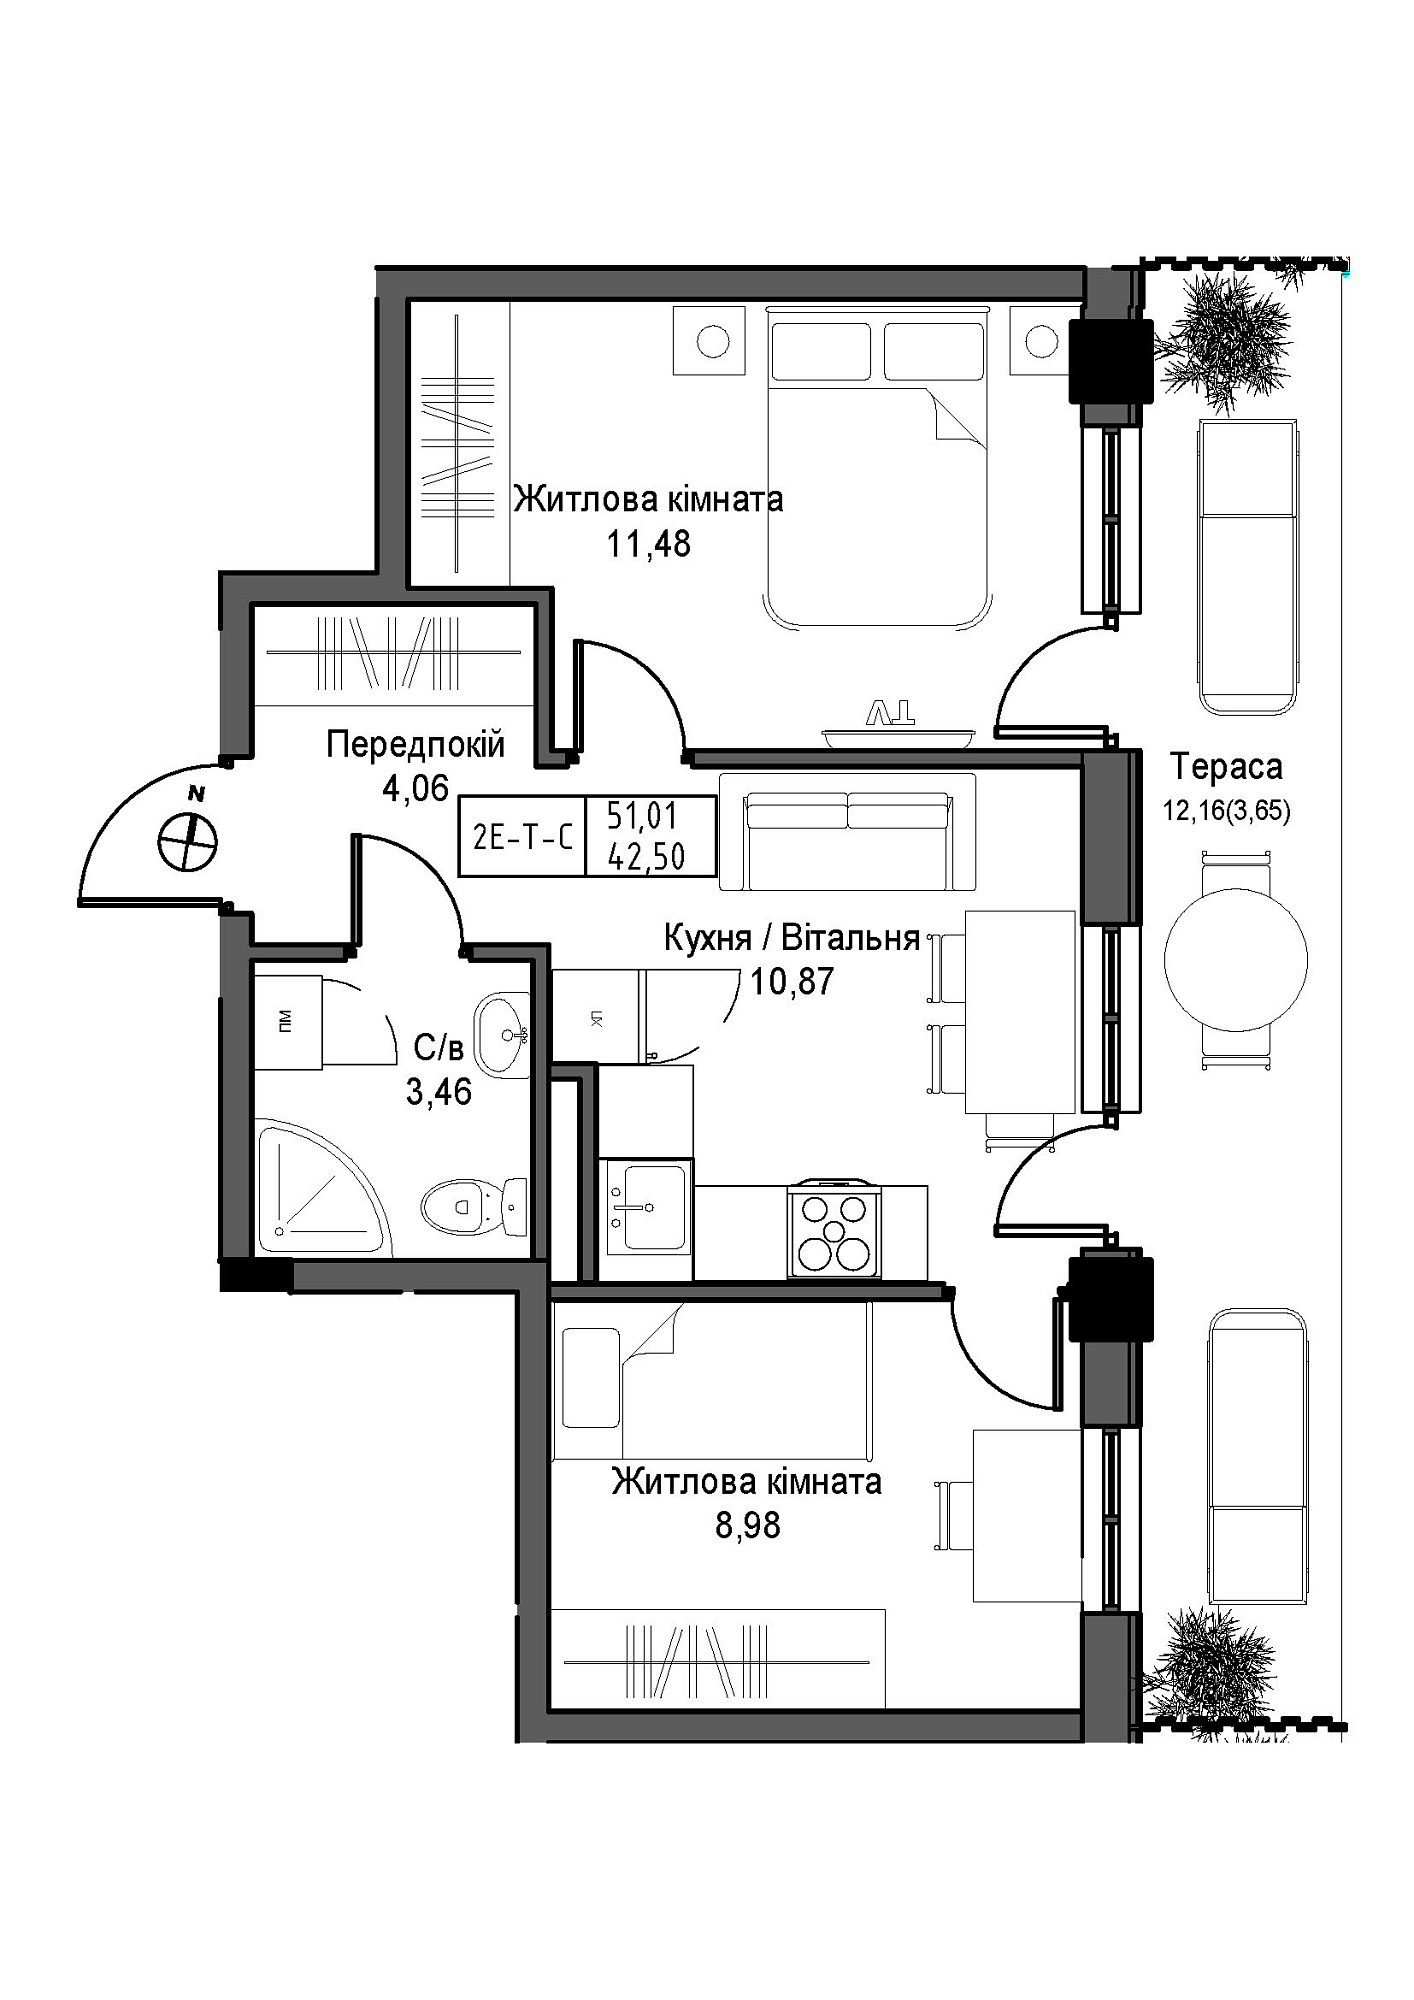 Планування 2-к квартира площею 42.5м2, UM-007-09/0007.